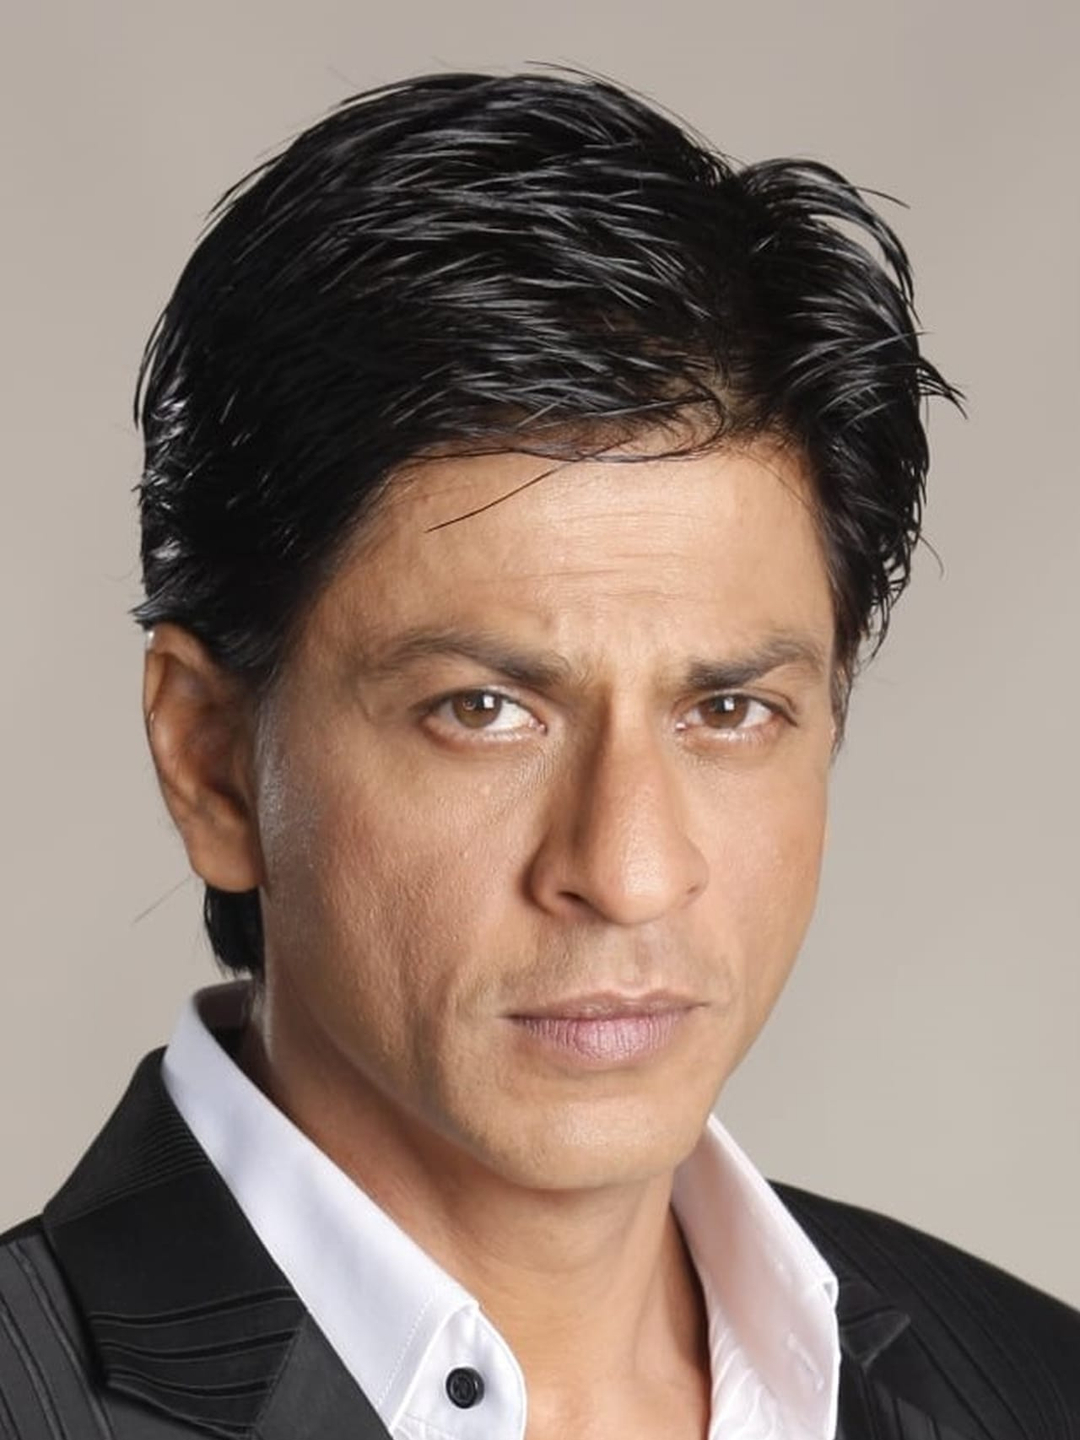 Shah Rukh Khan personal traits